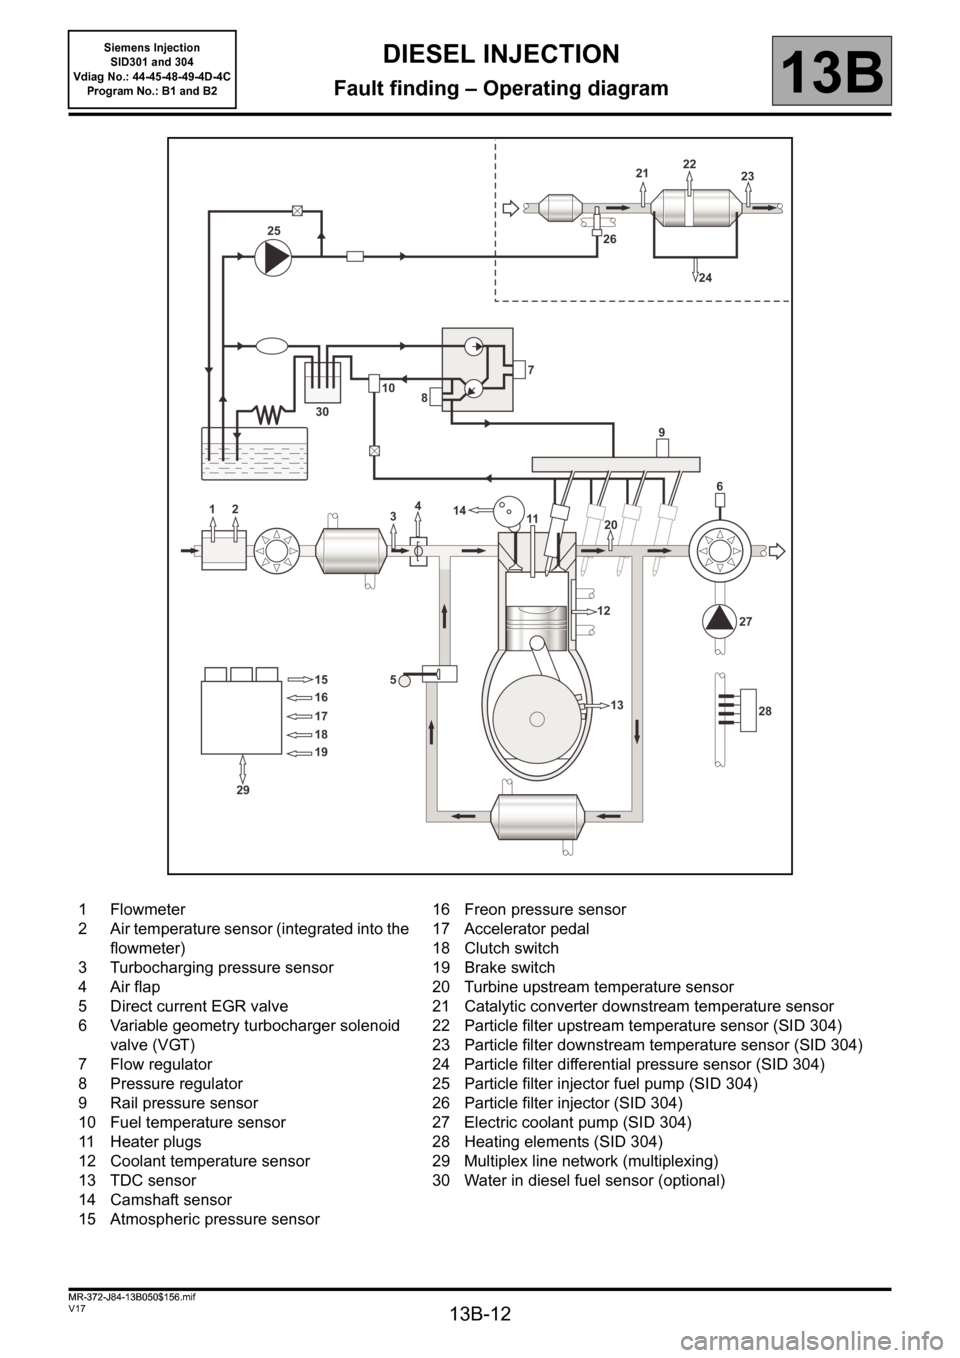 RENAULT SCENIC 2011 J95 / 3.G Engine And Peripherals Siemens Injection Workshop Manual 13B-12
MR-372-J84-13B050$156.mif
V17
13B
DIESEL INJECTION
Fault finding – Operating diagram
1 Flowmeter
2 Air temperature sensor (integrated into the 
flowmeter)
3 Turbocharging pressure sensor
4 Ai